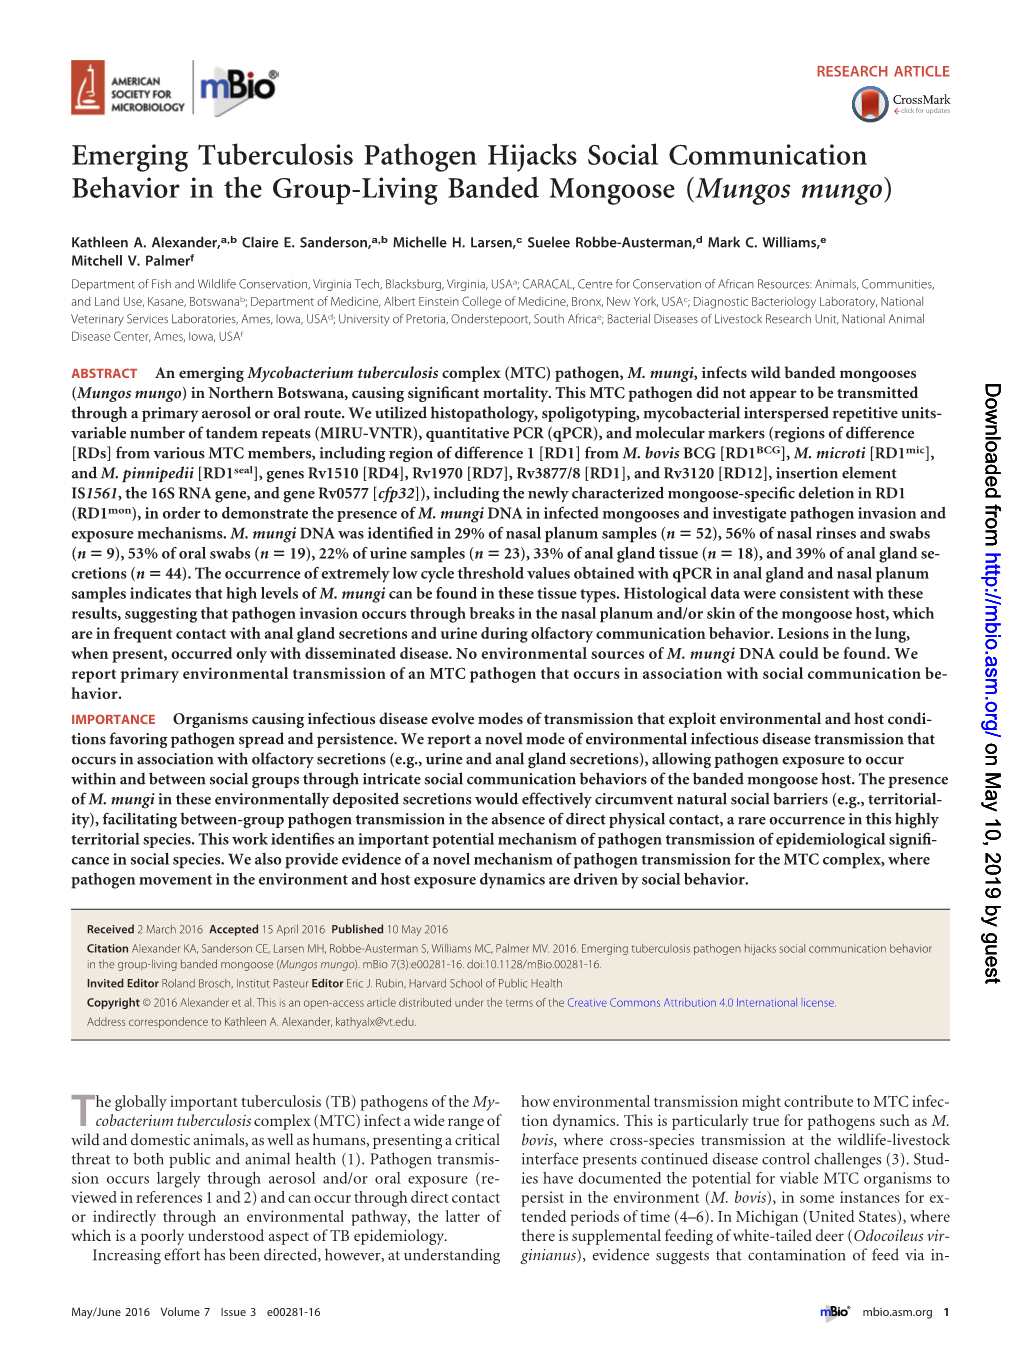 Emerging Tuberculosis Pathogen Hijacks Social Communication Behavior in the Group-Living Banded Mongoose (Mungos Mungo)